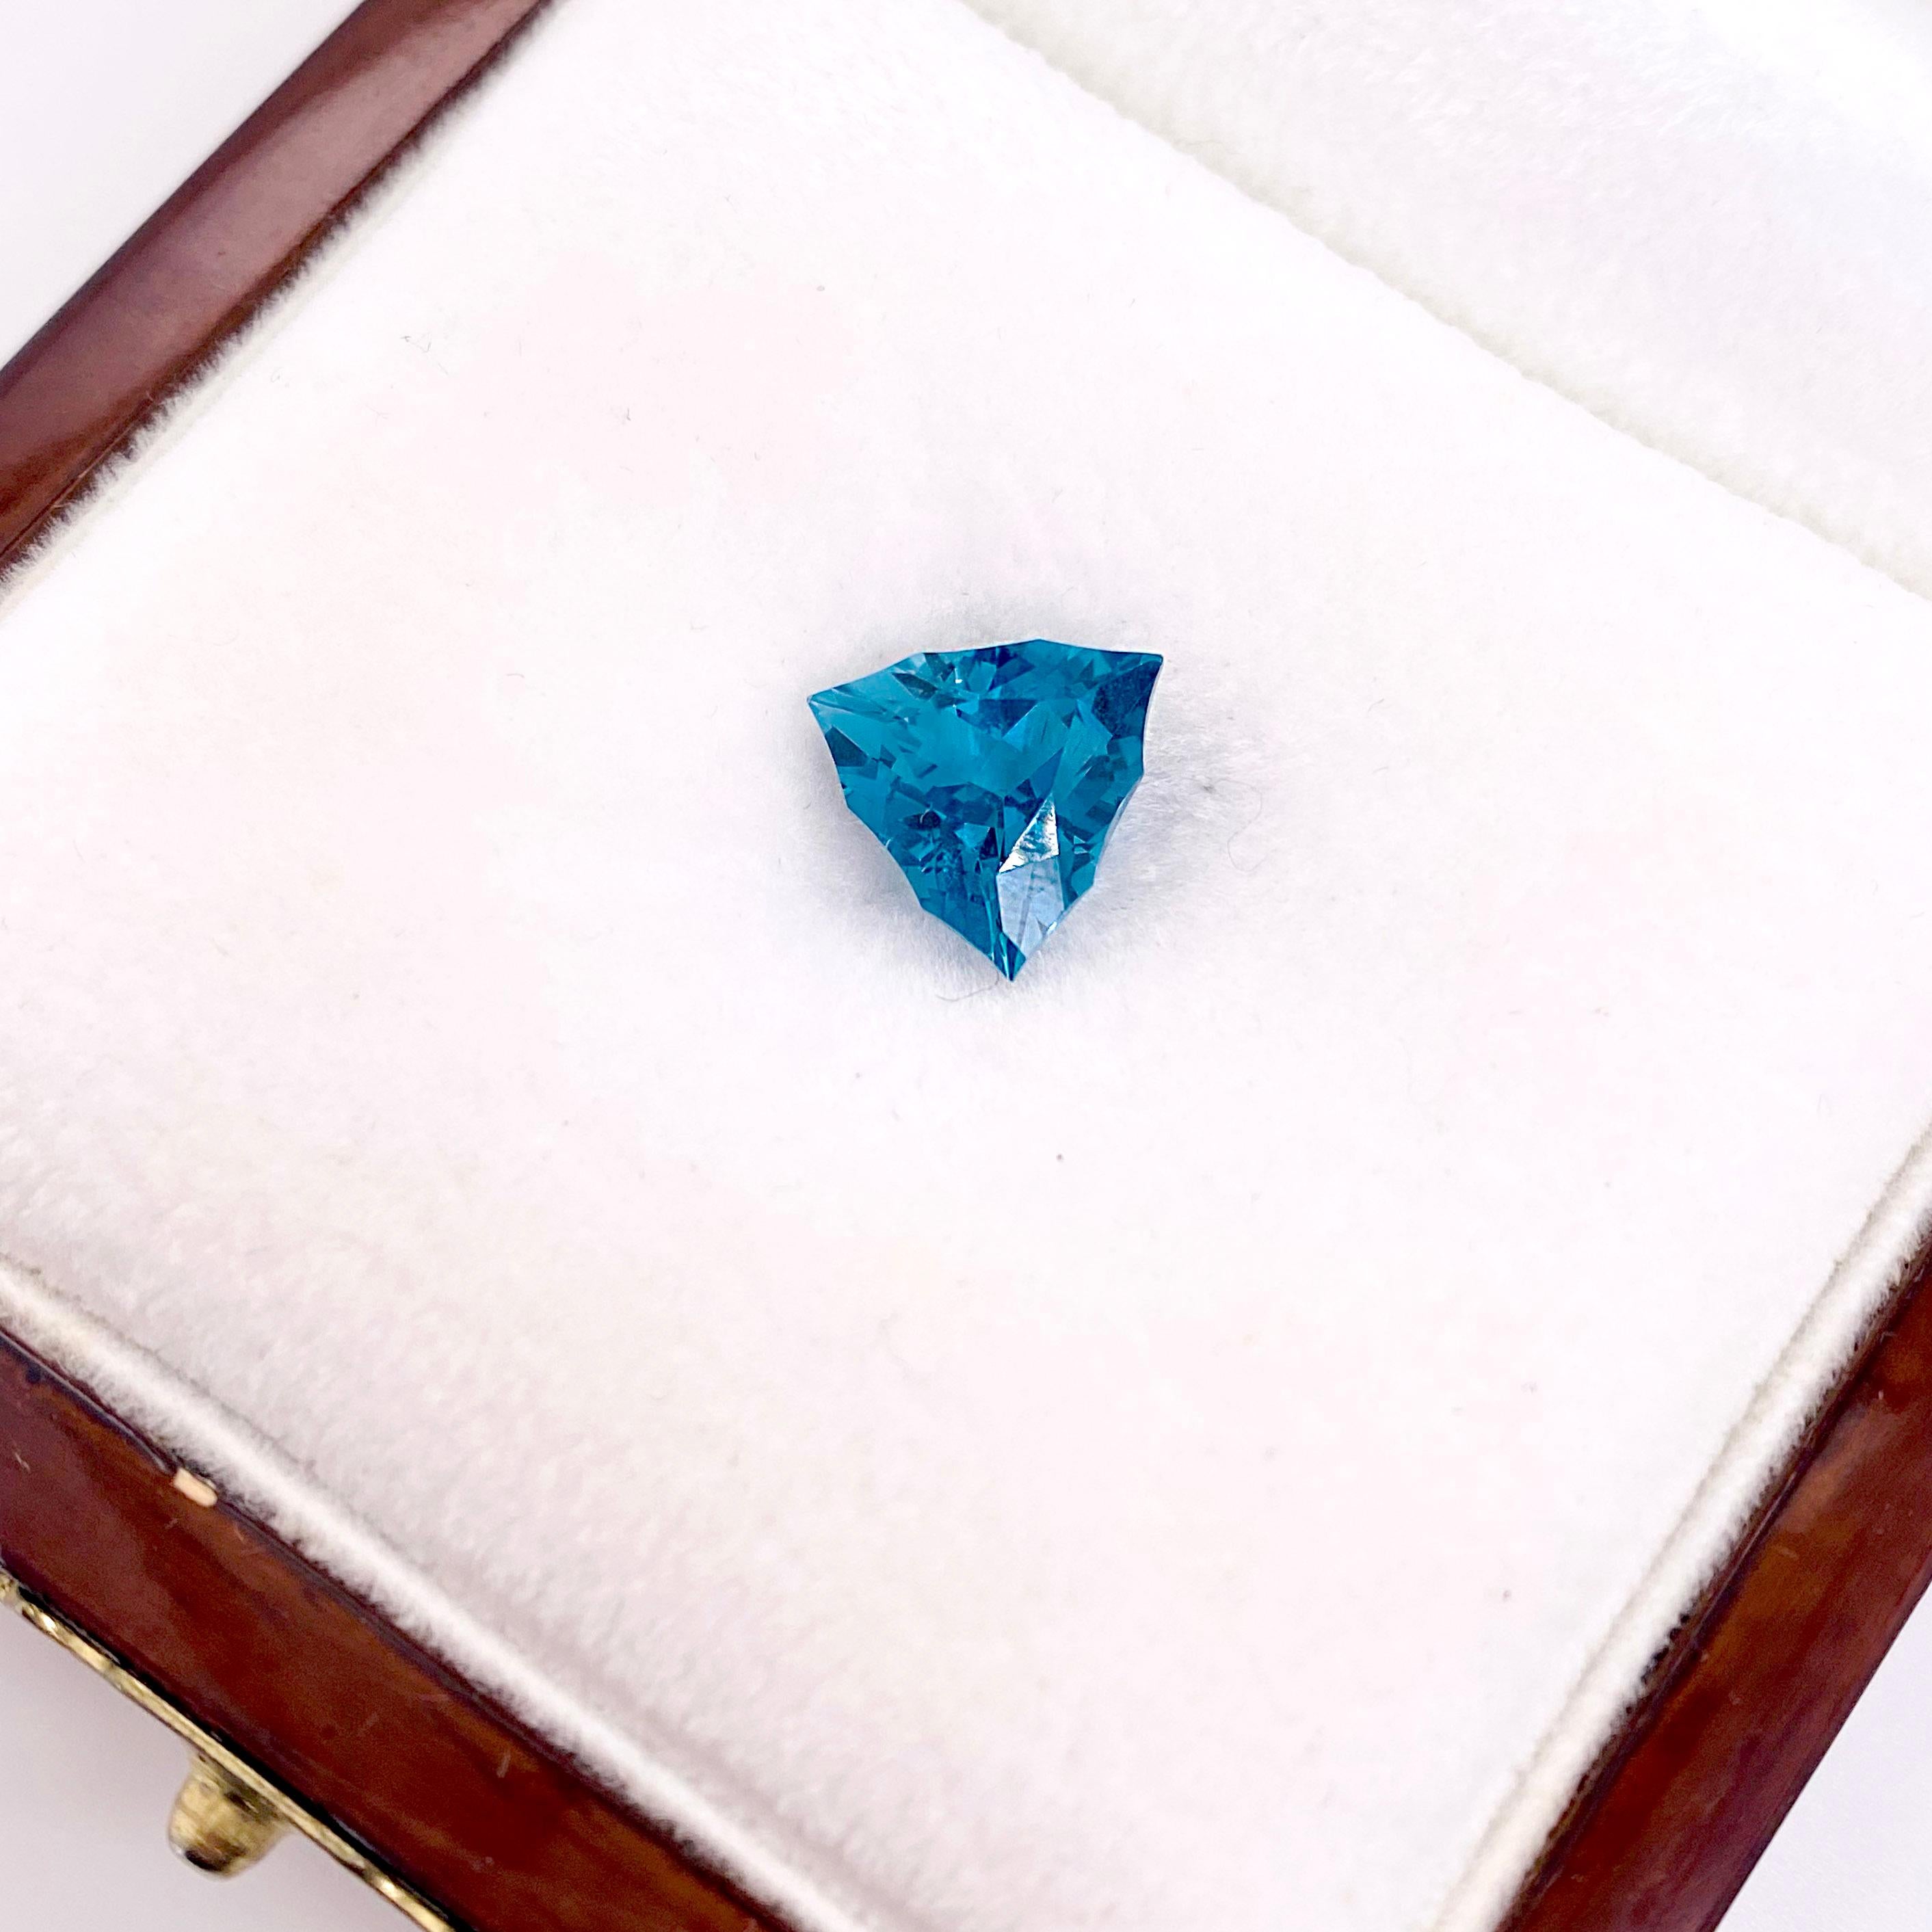 Contemporain Topaze bleue London London Fancy Gemstone 3,81 carats Cut by Famous Brazilian Cutter